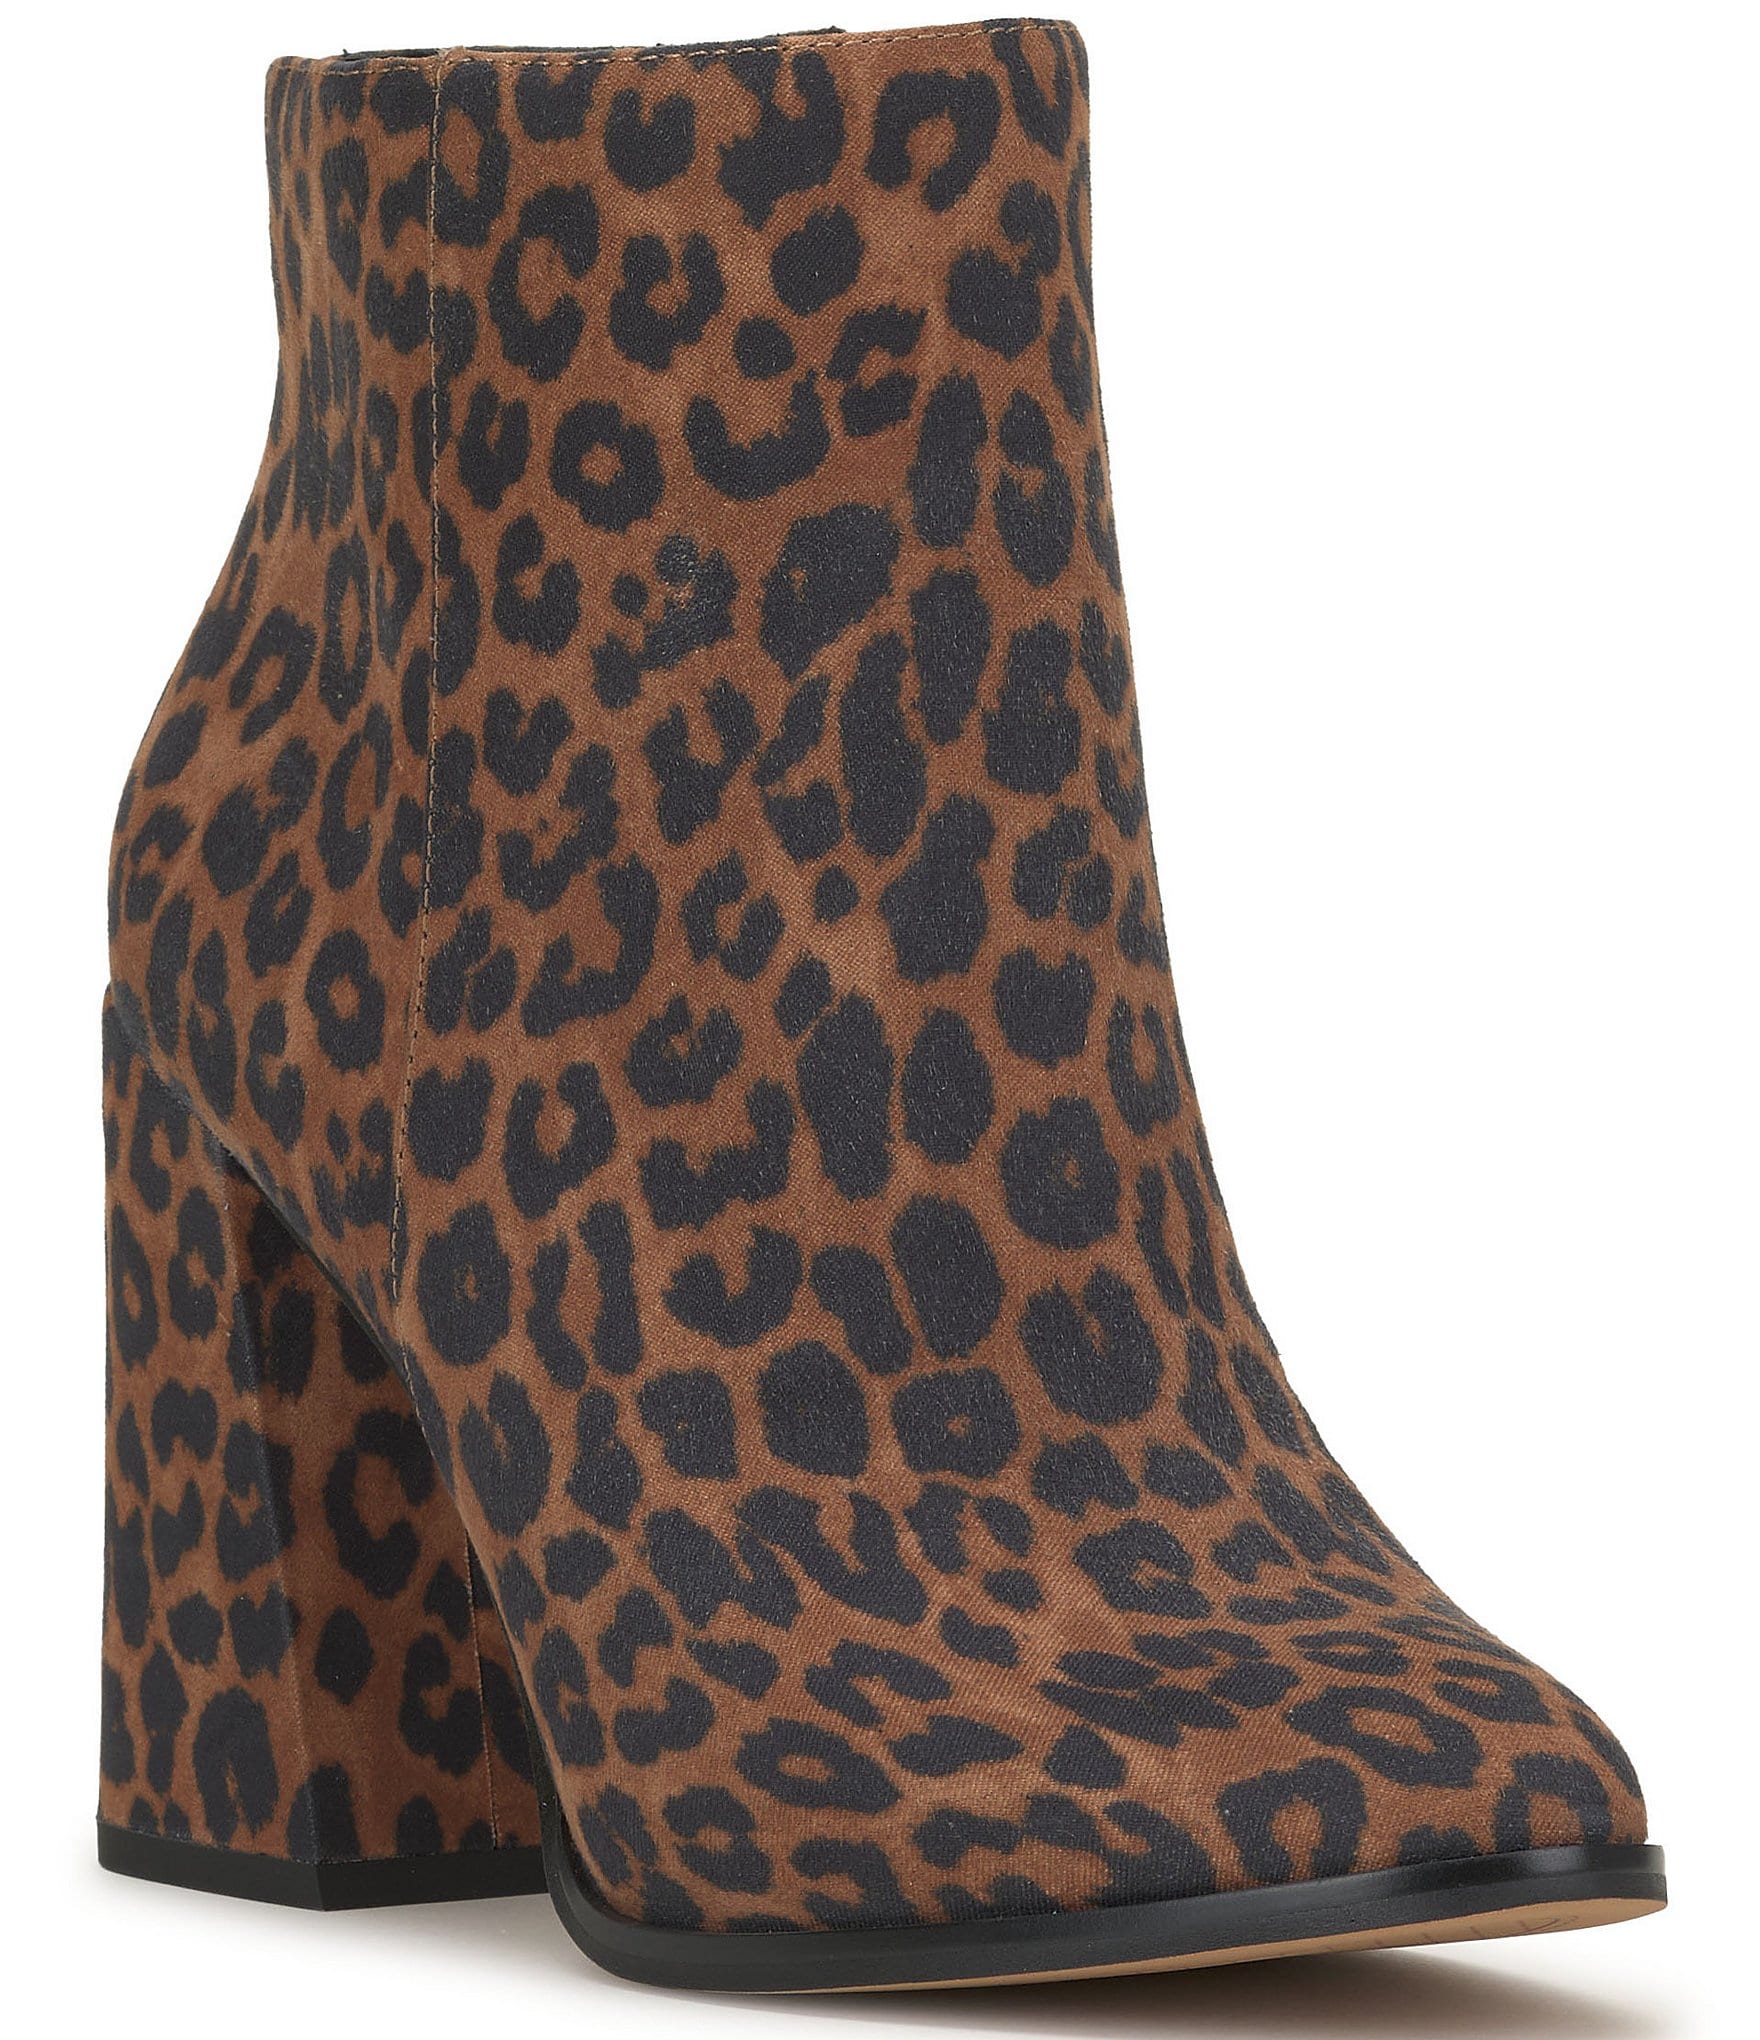  Jazamé Women's Rider Ankle High Chunky Stack Block Heel Leopard  Print Booties Dress Boots, Leopard, 5.5